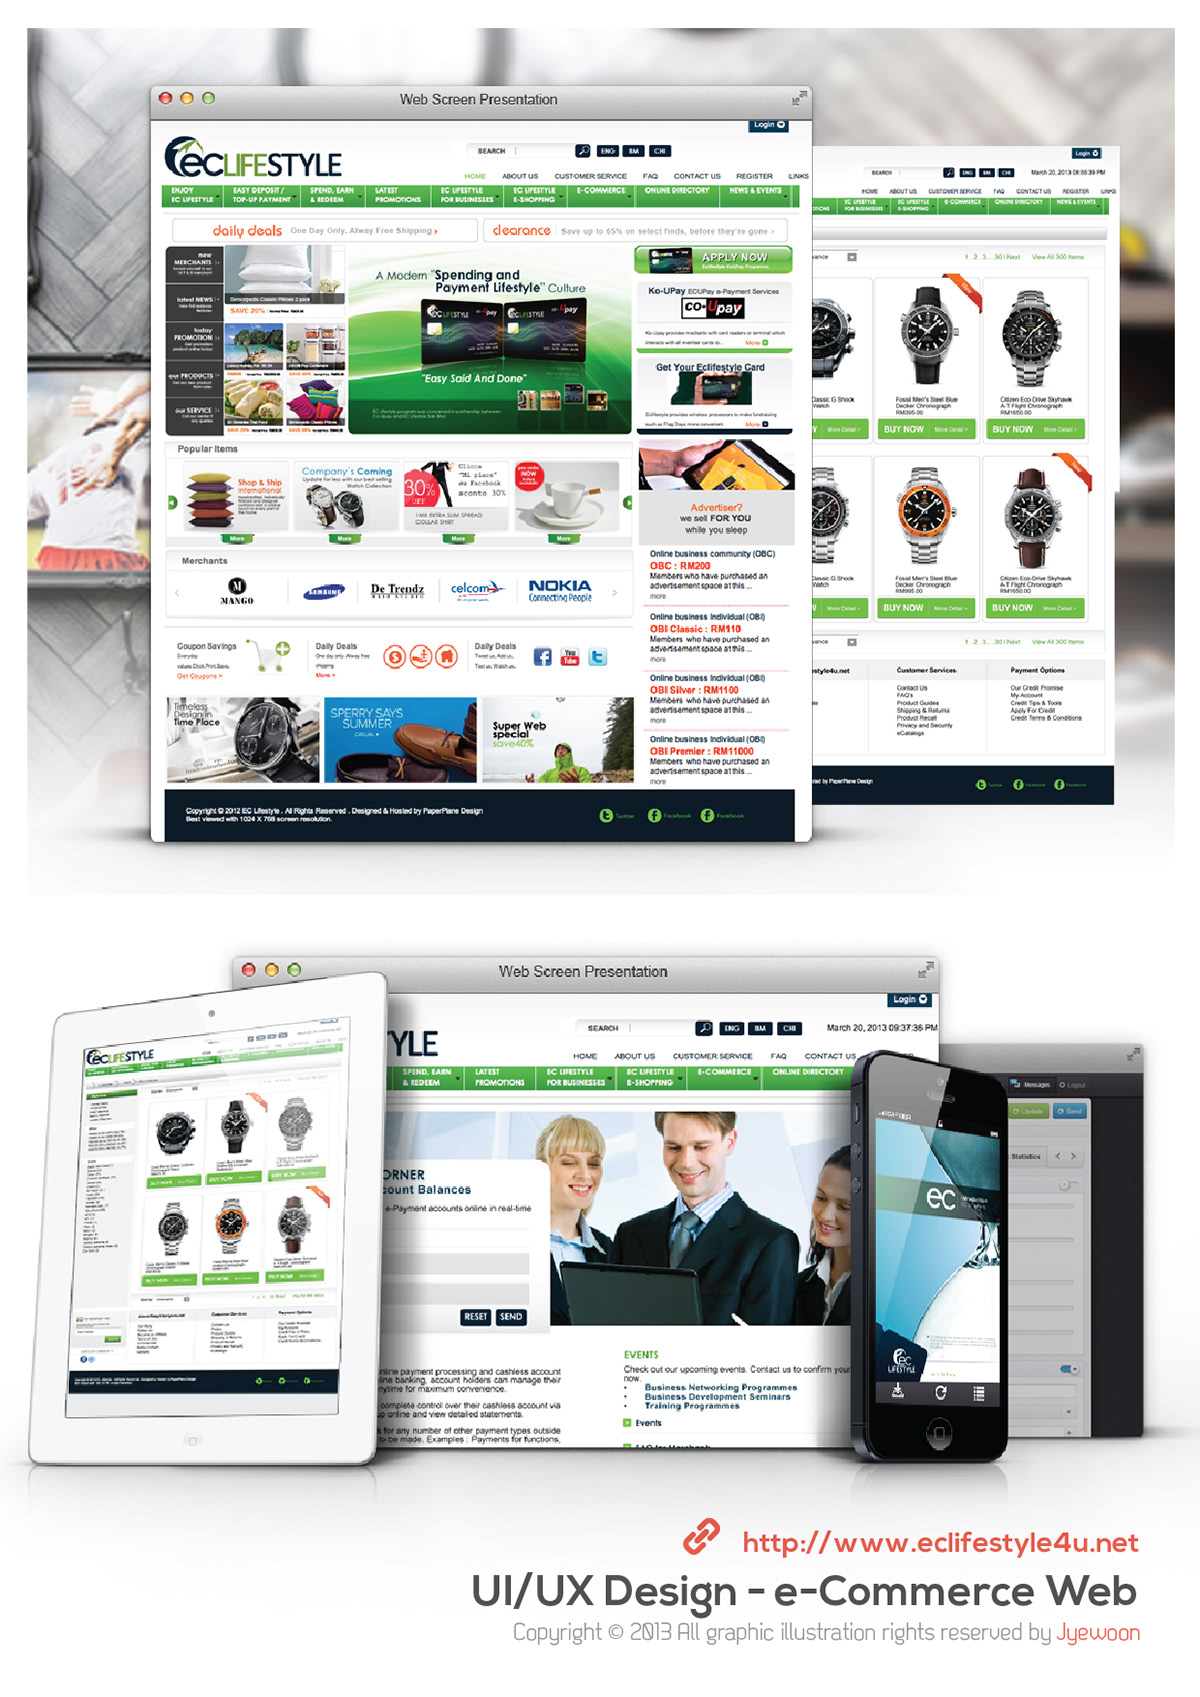 Multimedia  user interface user experience  branding Corporate Identity digital illustration new media  convergence design